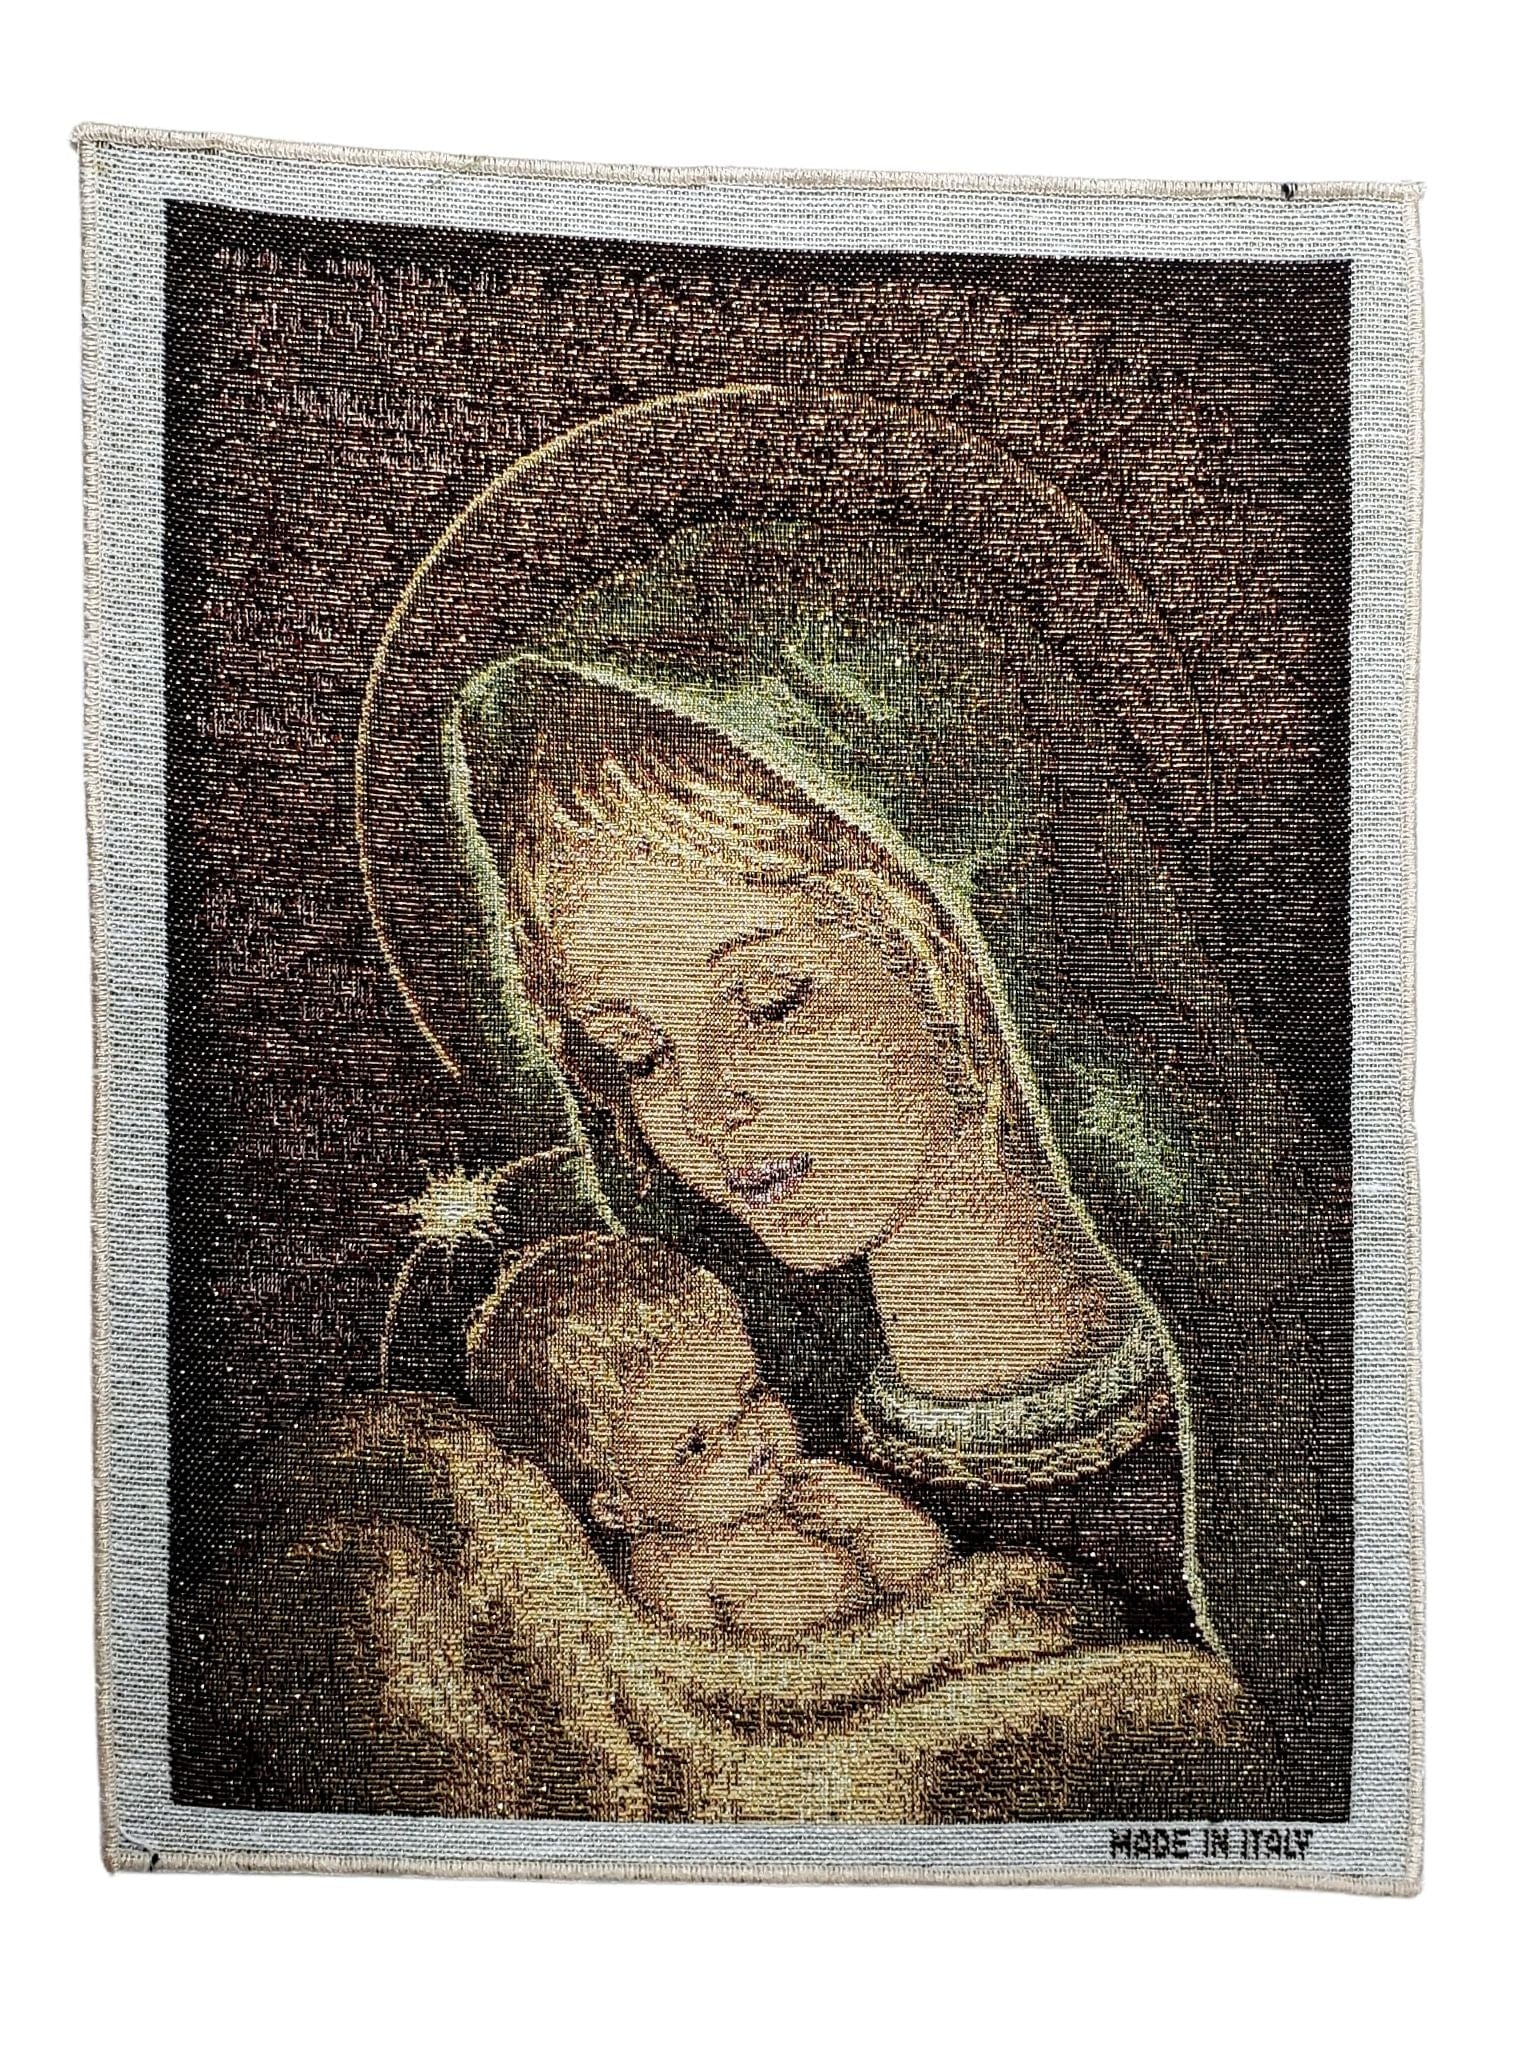 Tapeçaria da Madonna de Recanati-TerraCotta Arte Sacra